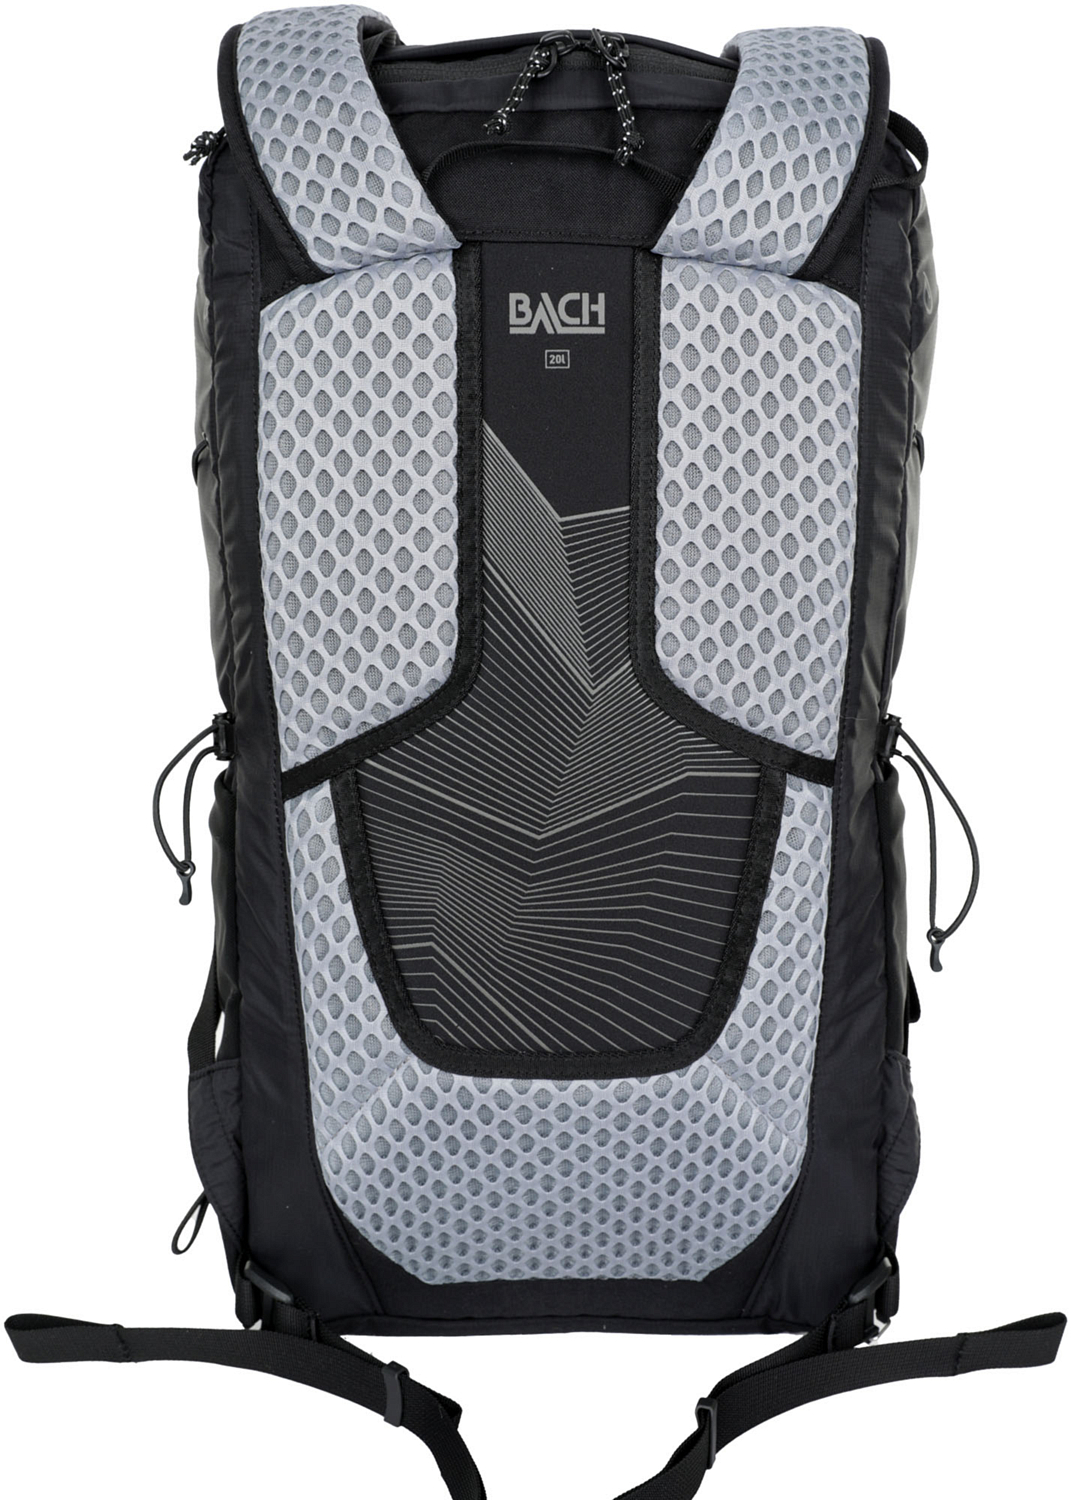 Рюкзак BACH Pack Shield 20 Black